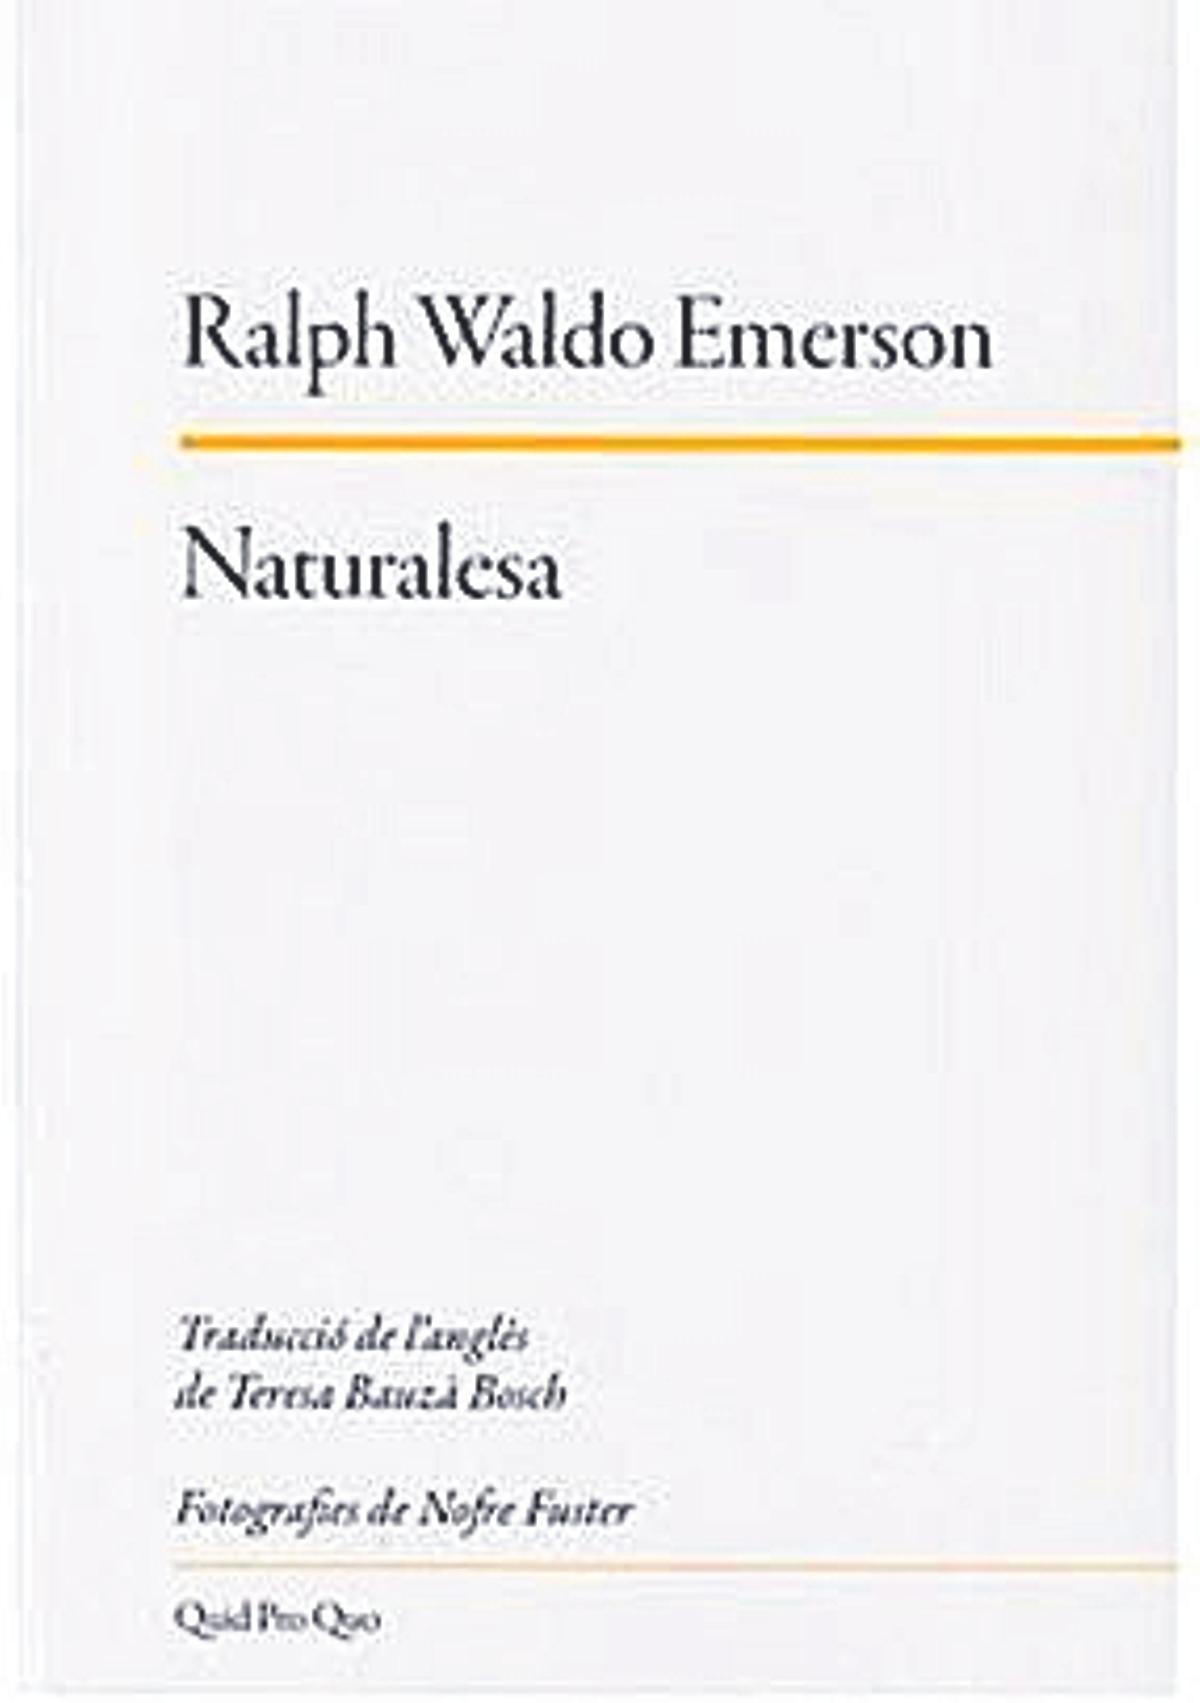 Portada del libro: Naturalesa Ralph Waldo Emerson, de Qui Pro Quo.  16 euros